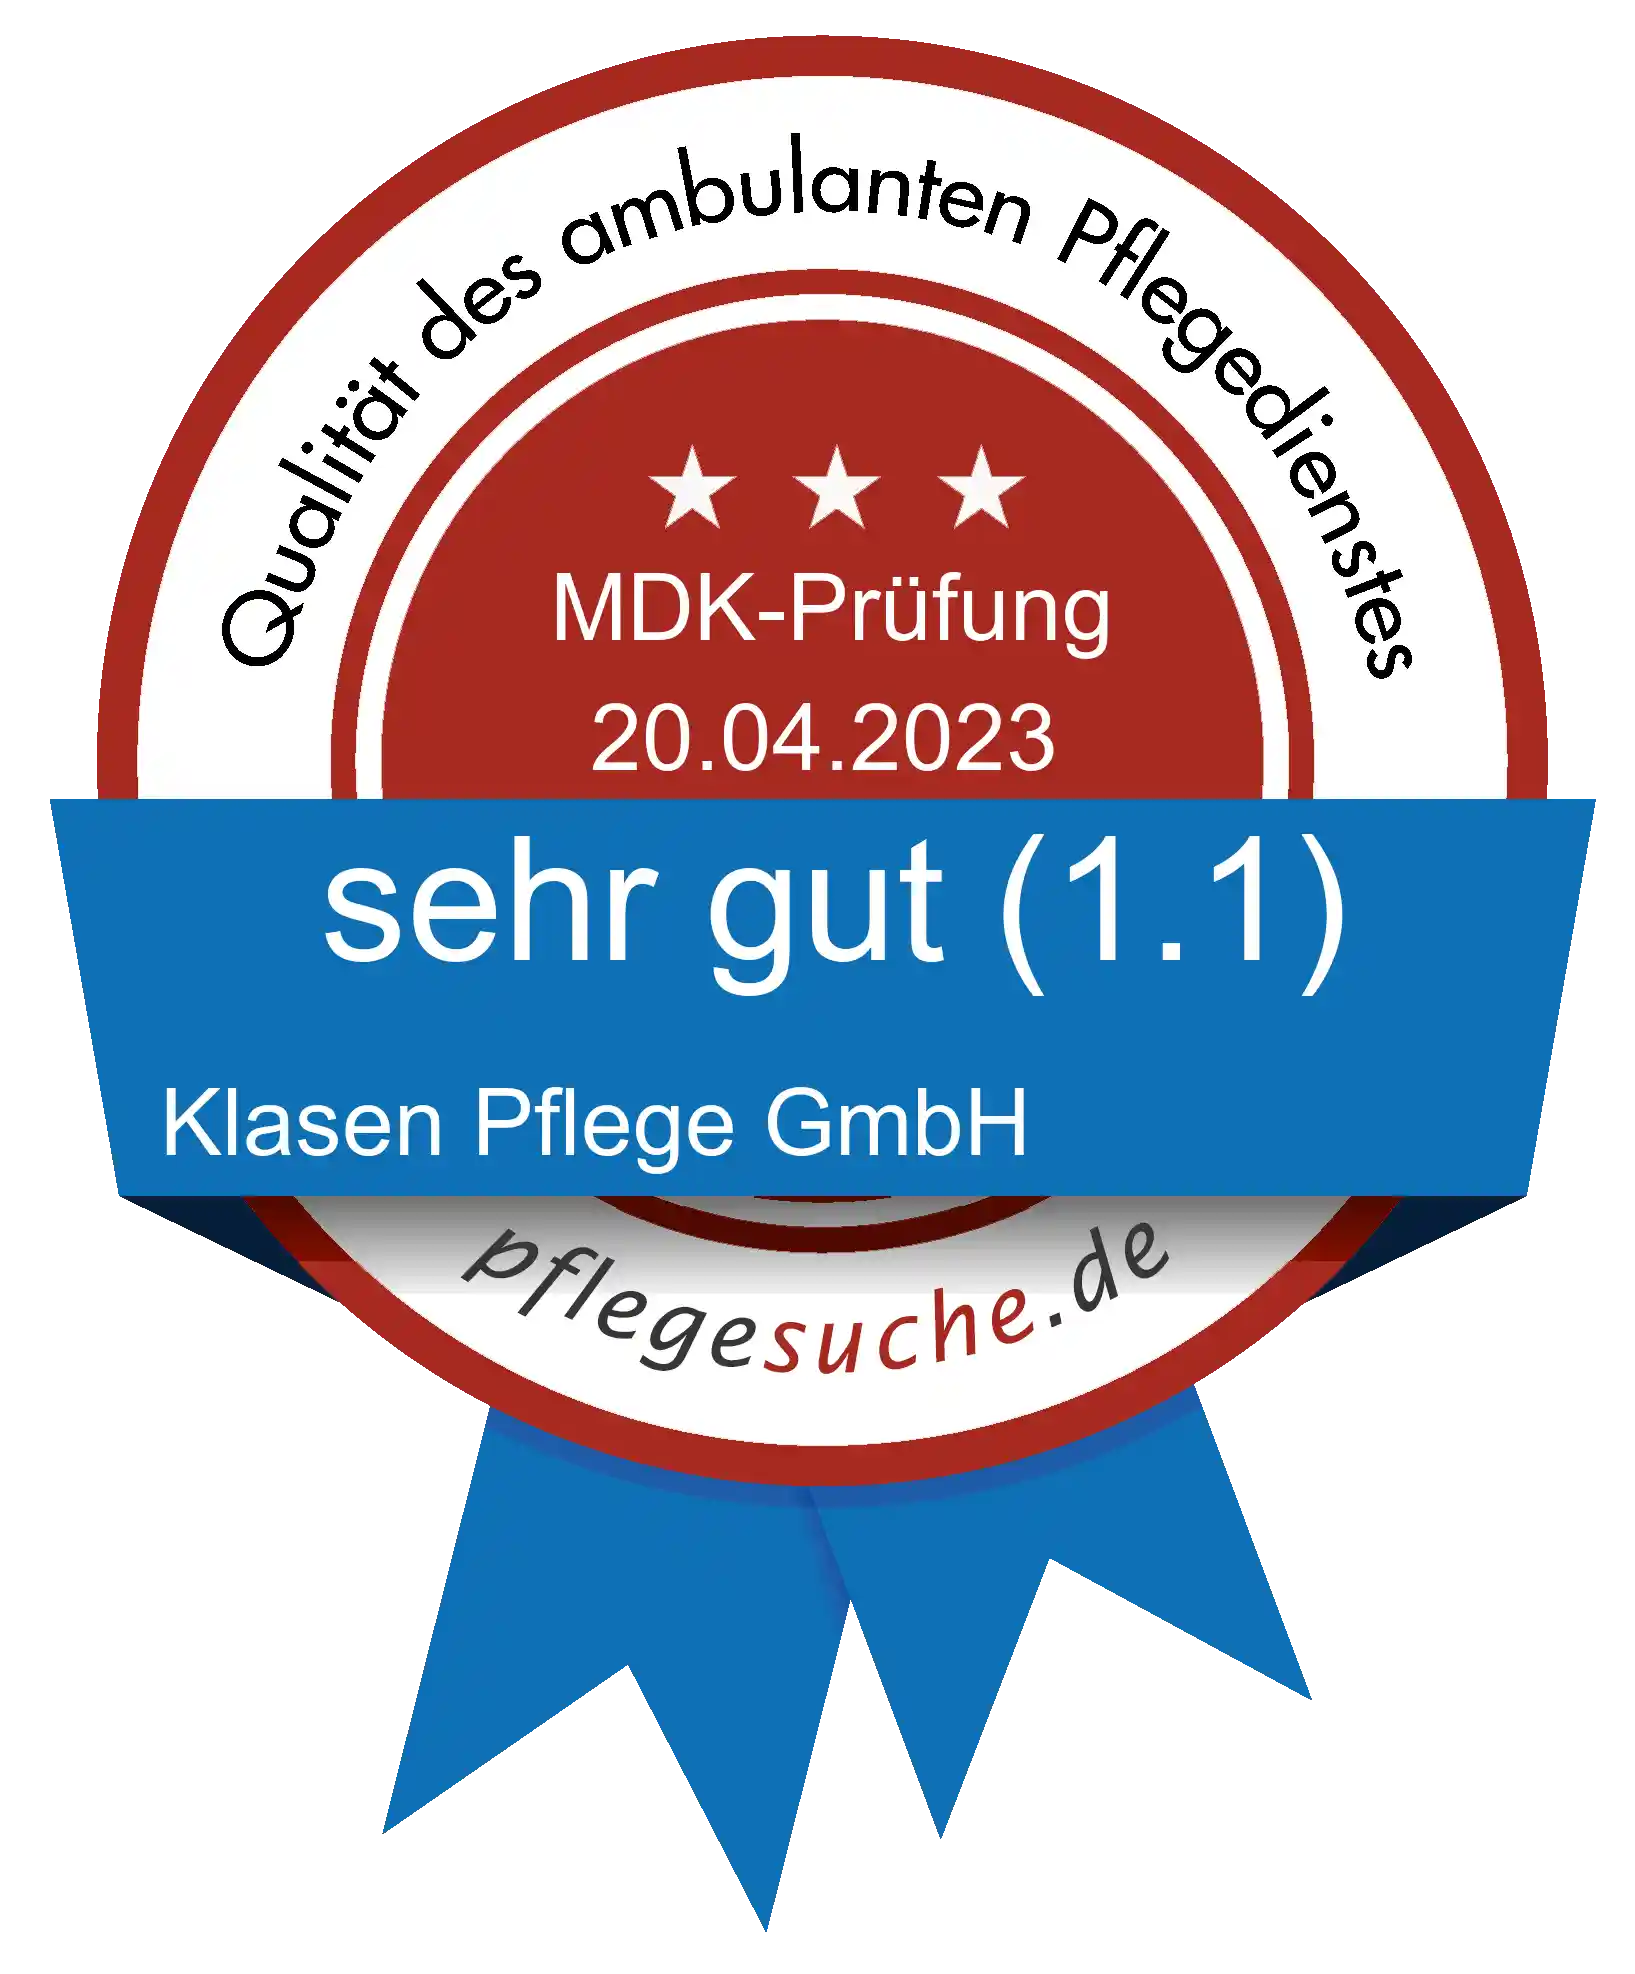 Siegel Benotung: Klasen Pflege GmbH